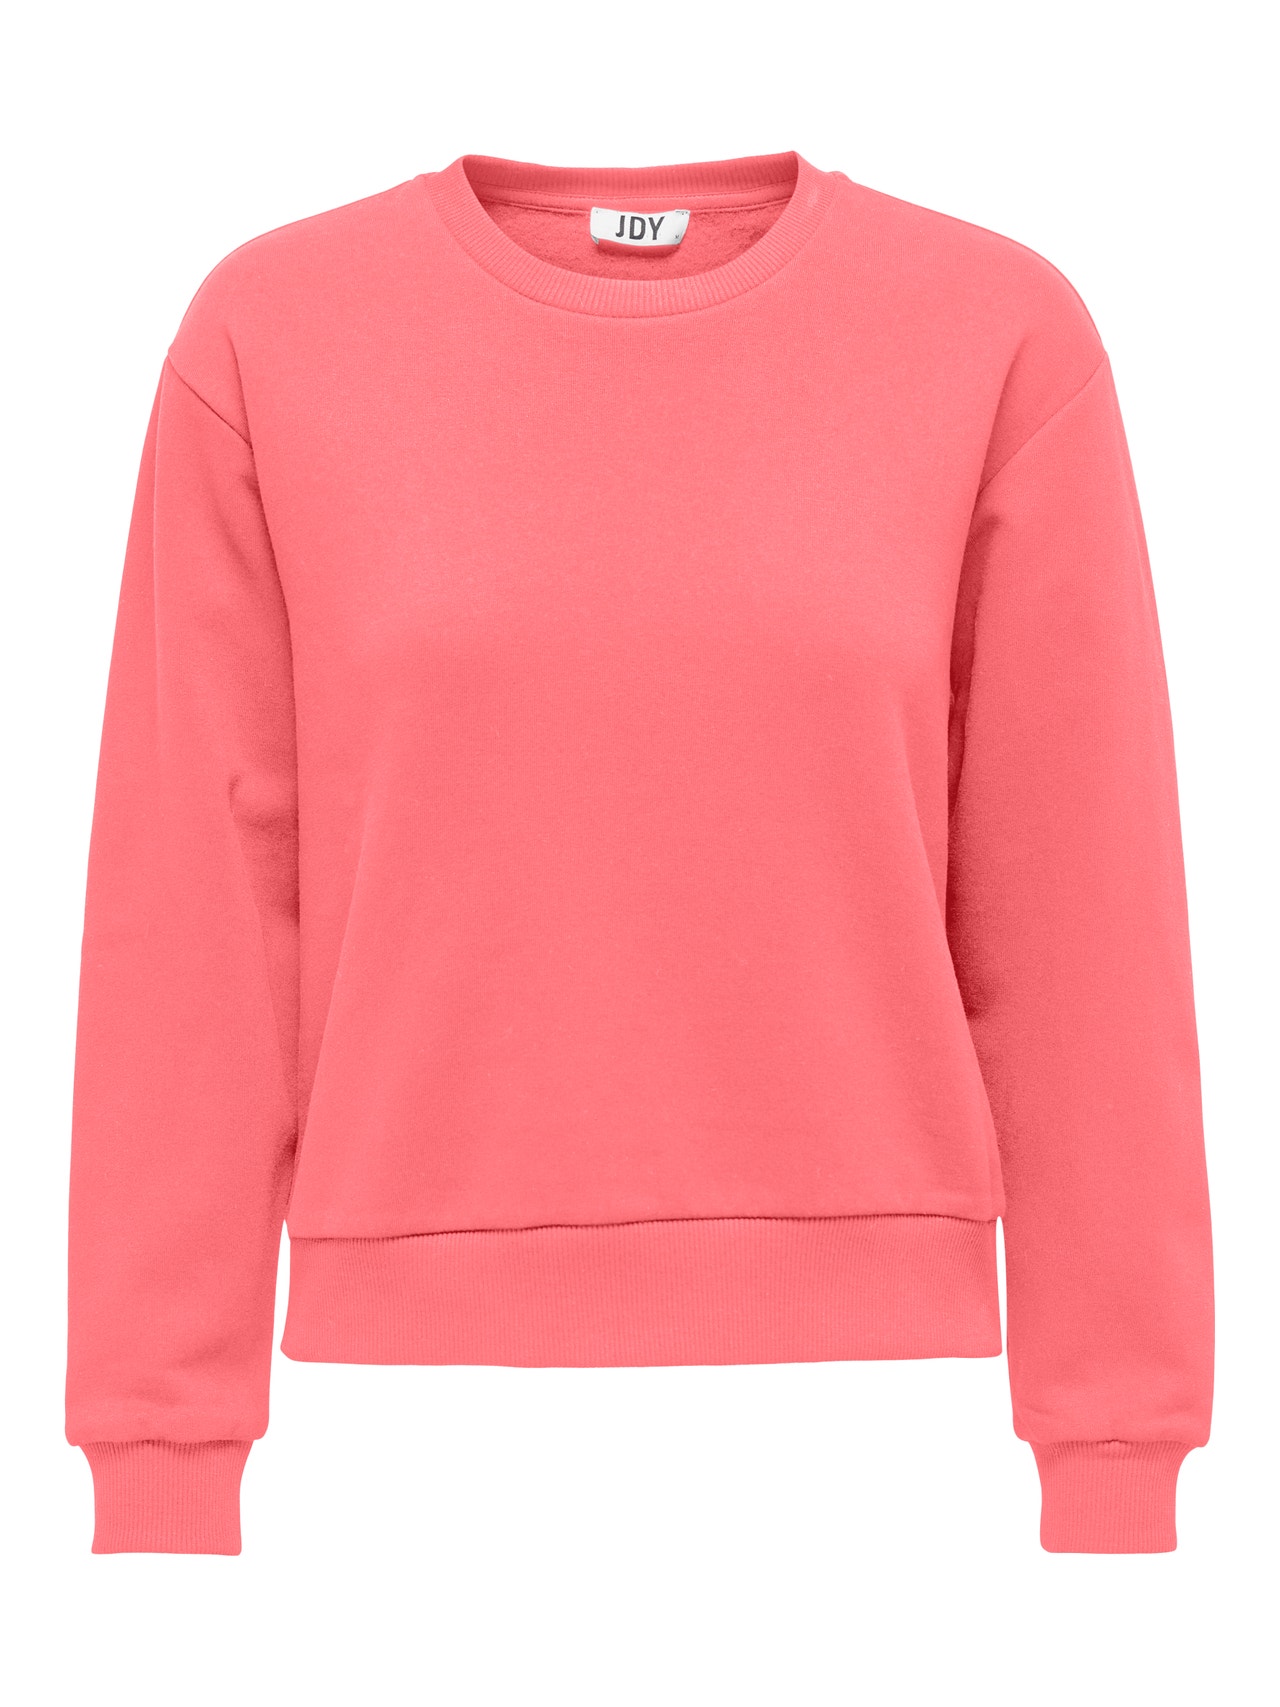 ONLY Long sleeved Sweatshirt -Sugar Coral - 15289279